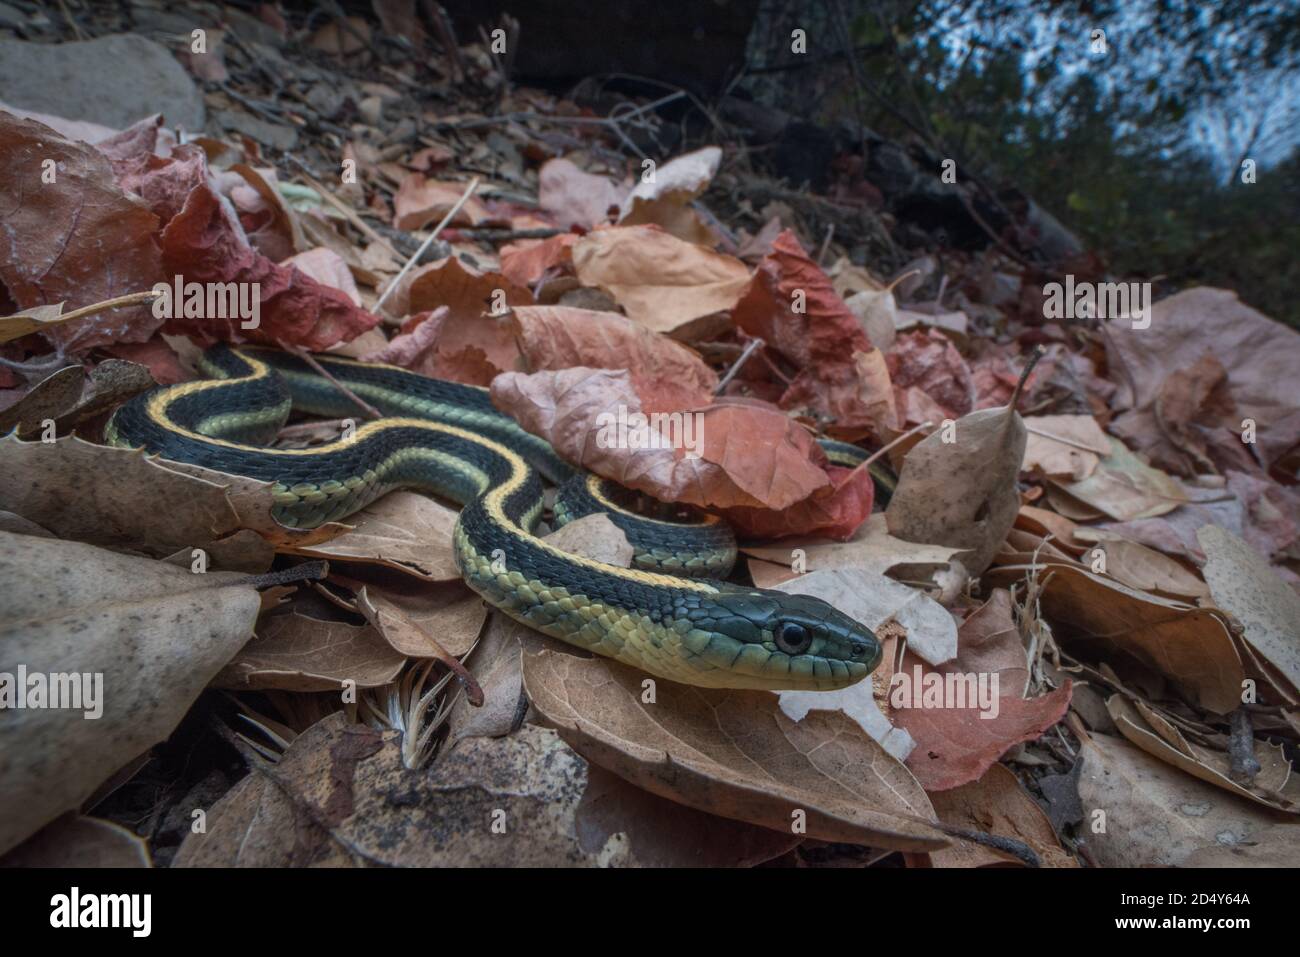 Diablo Range Gartersnake (Thamnophis atratus zaxanthus) a subspecies of garter snake endemic to the Diablo range in the Bay area of California. Stock Photo